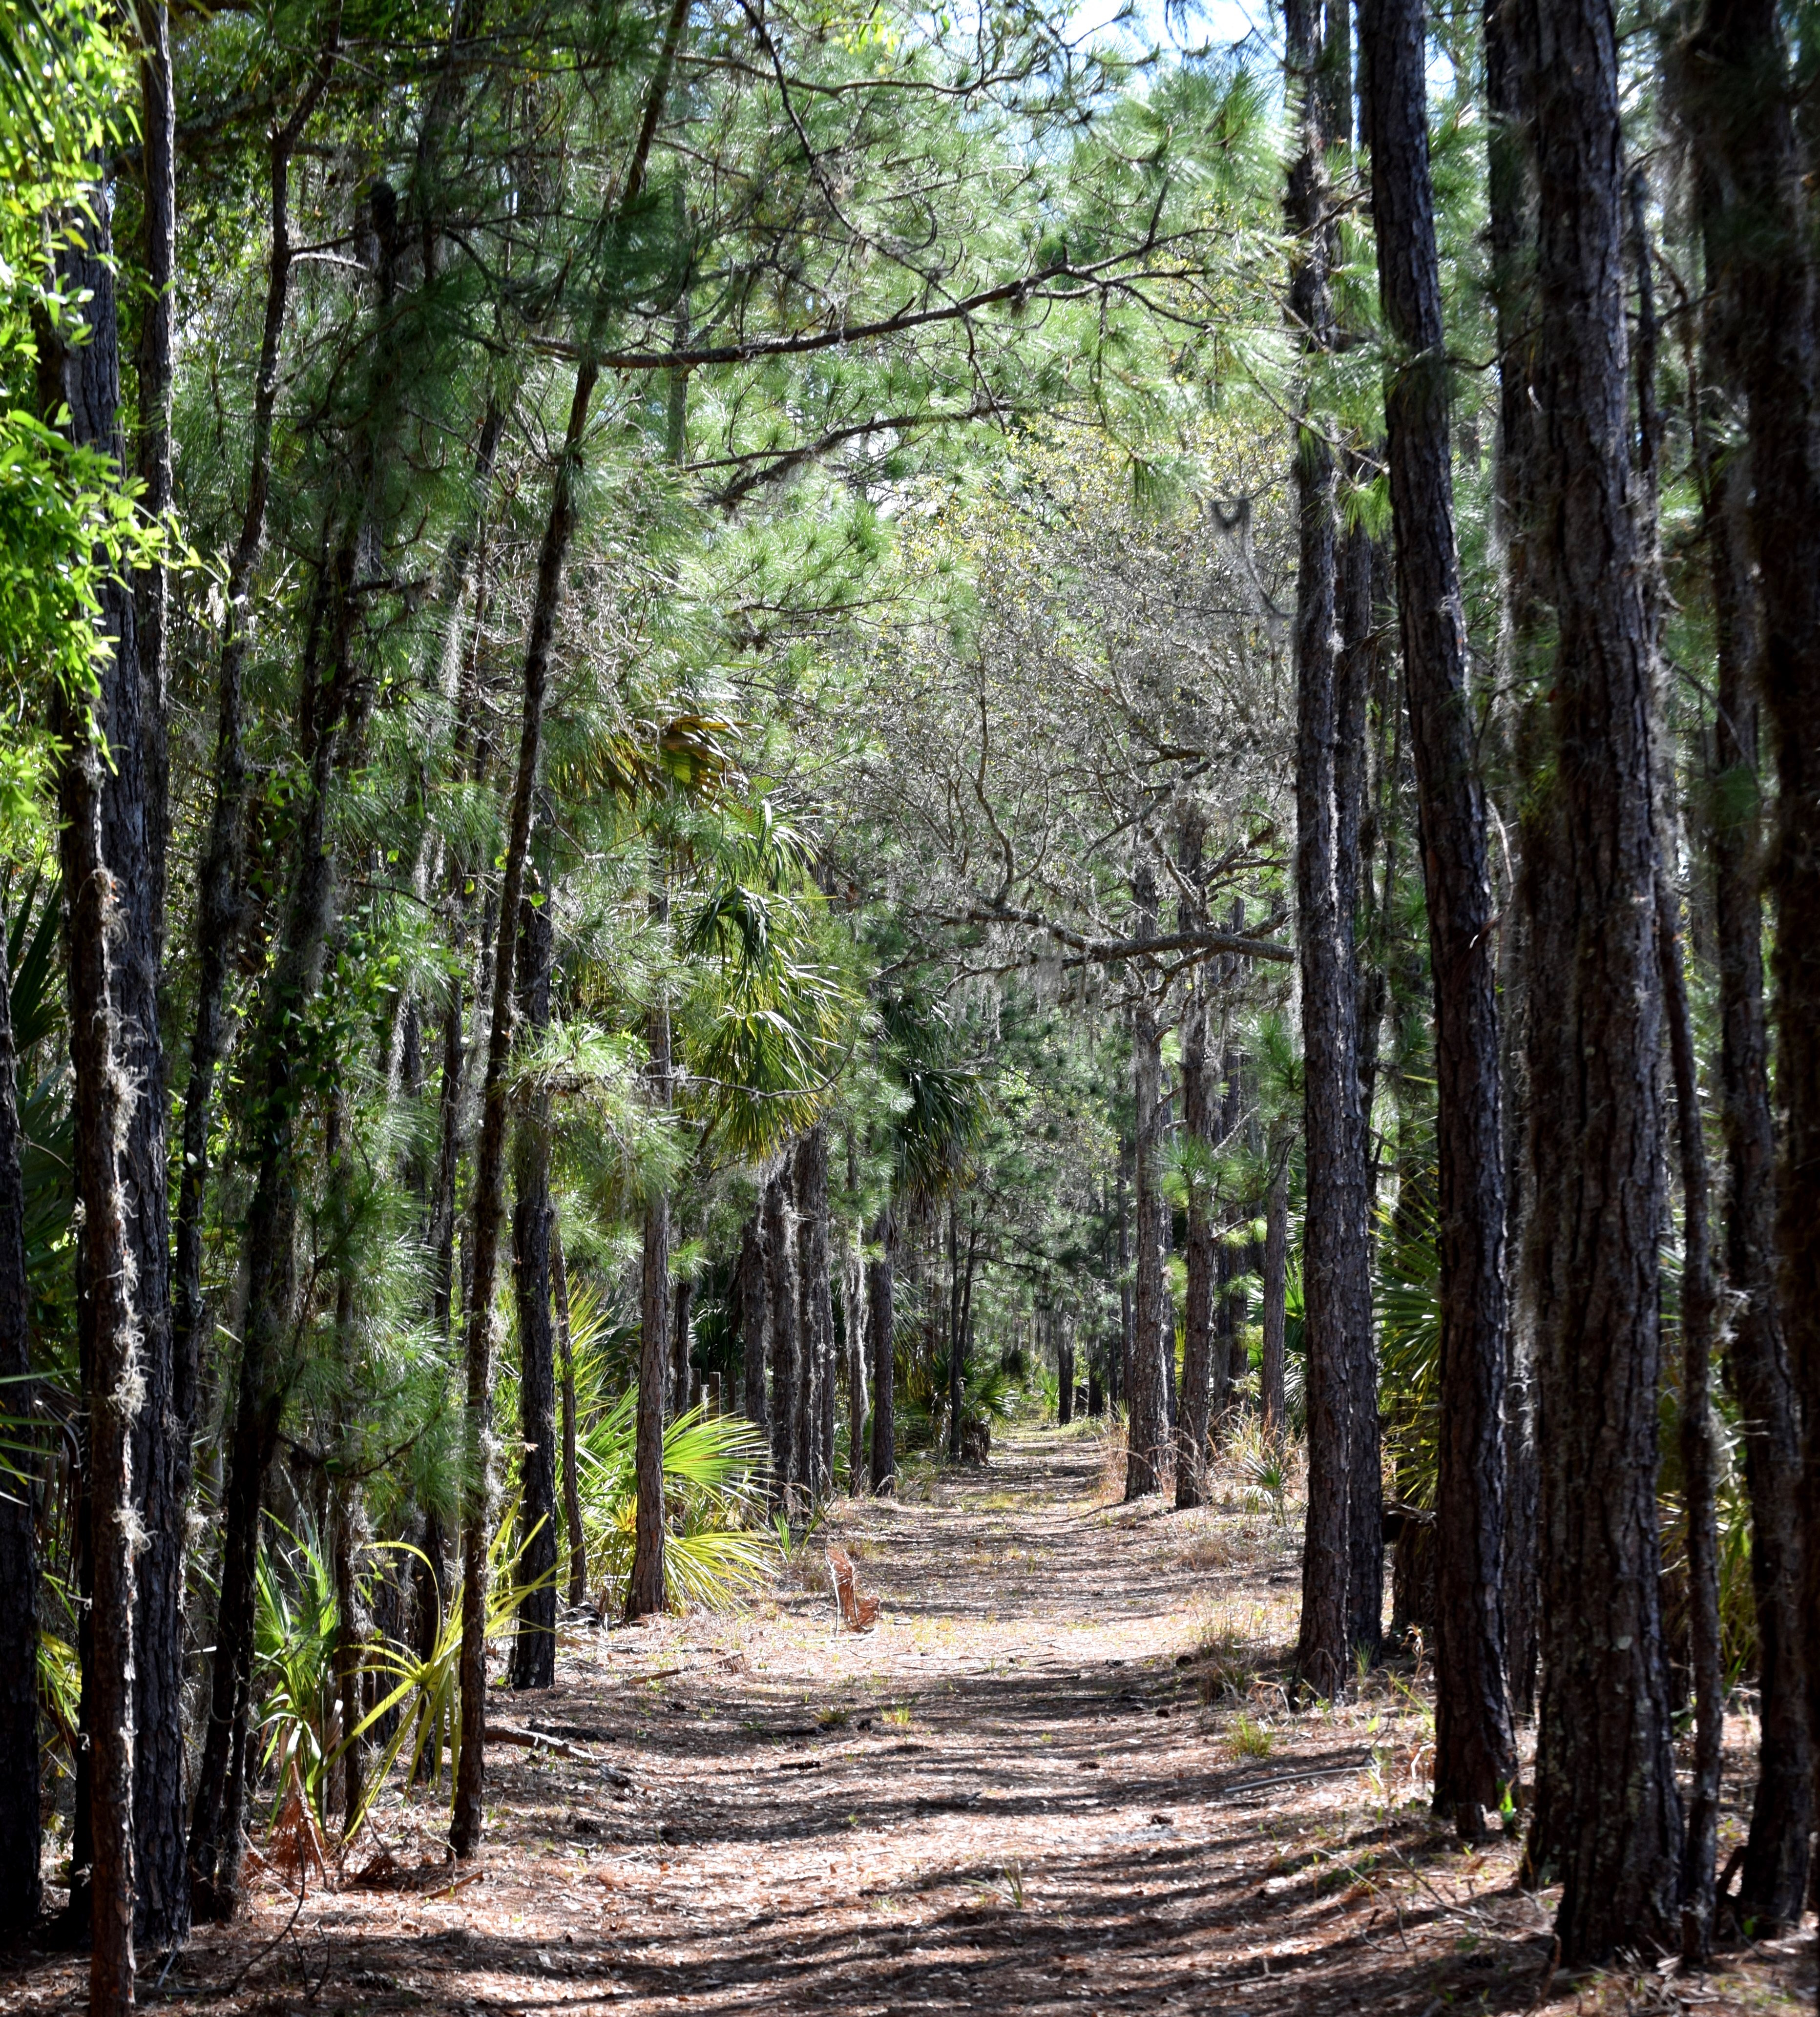 Un sendero para caminar bordeado de árboles de copas altas